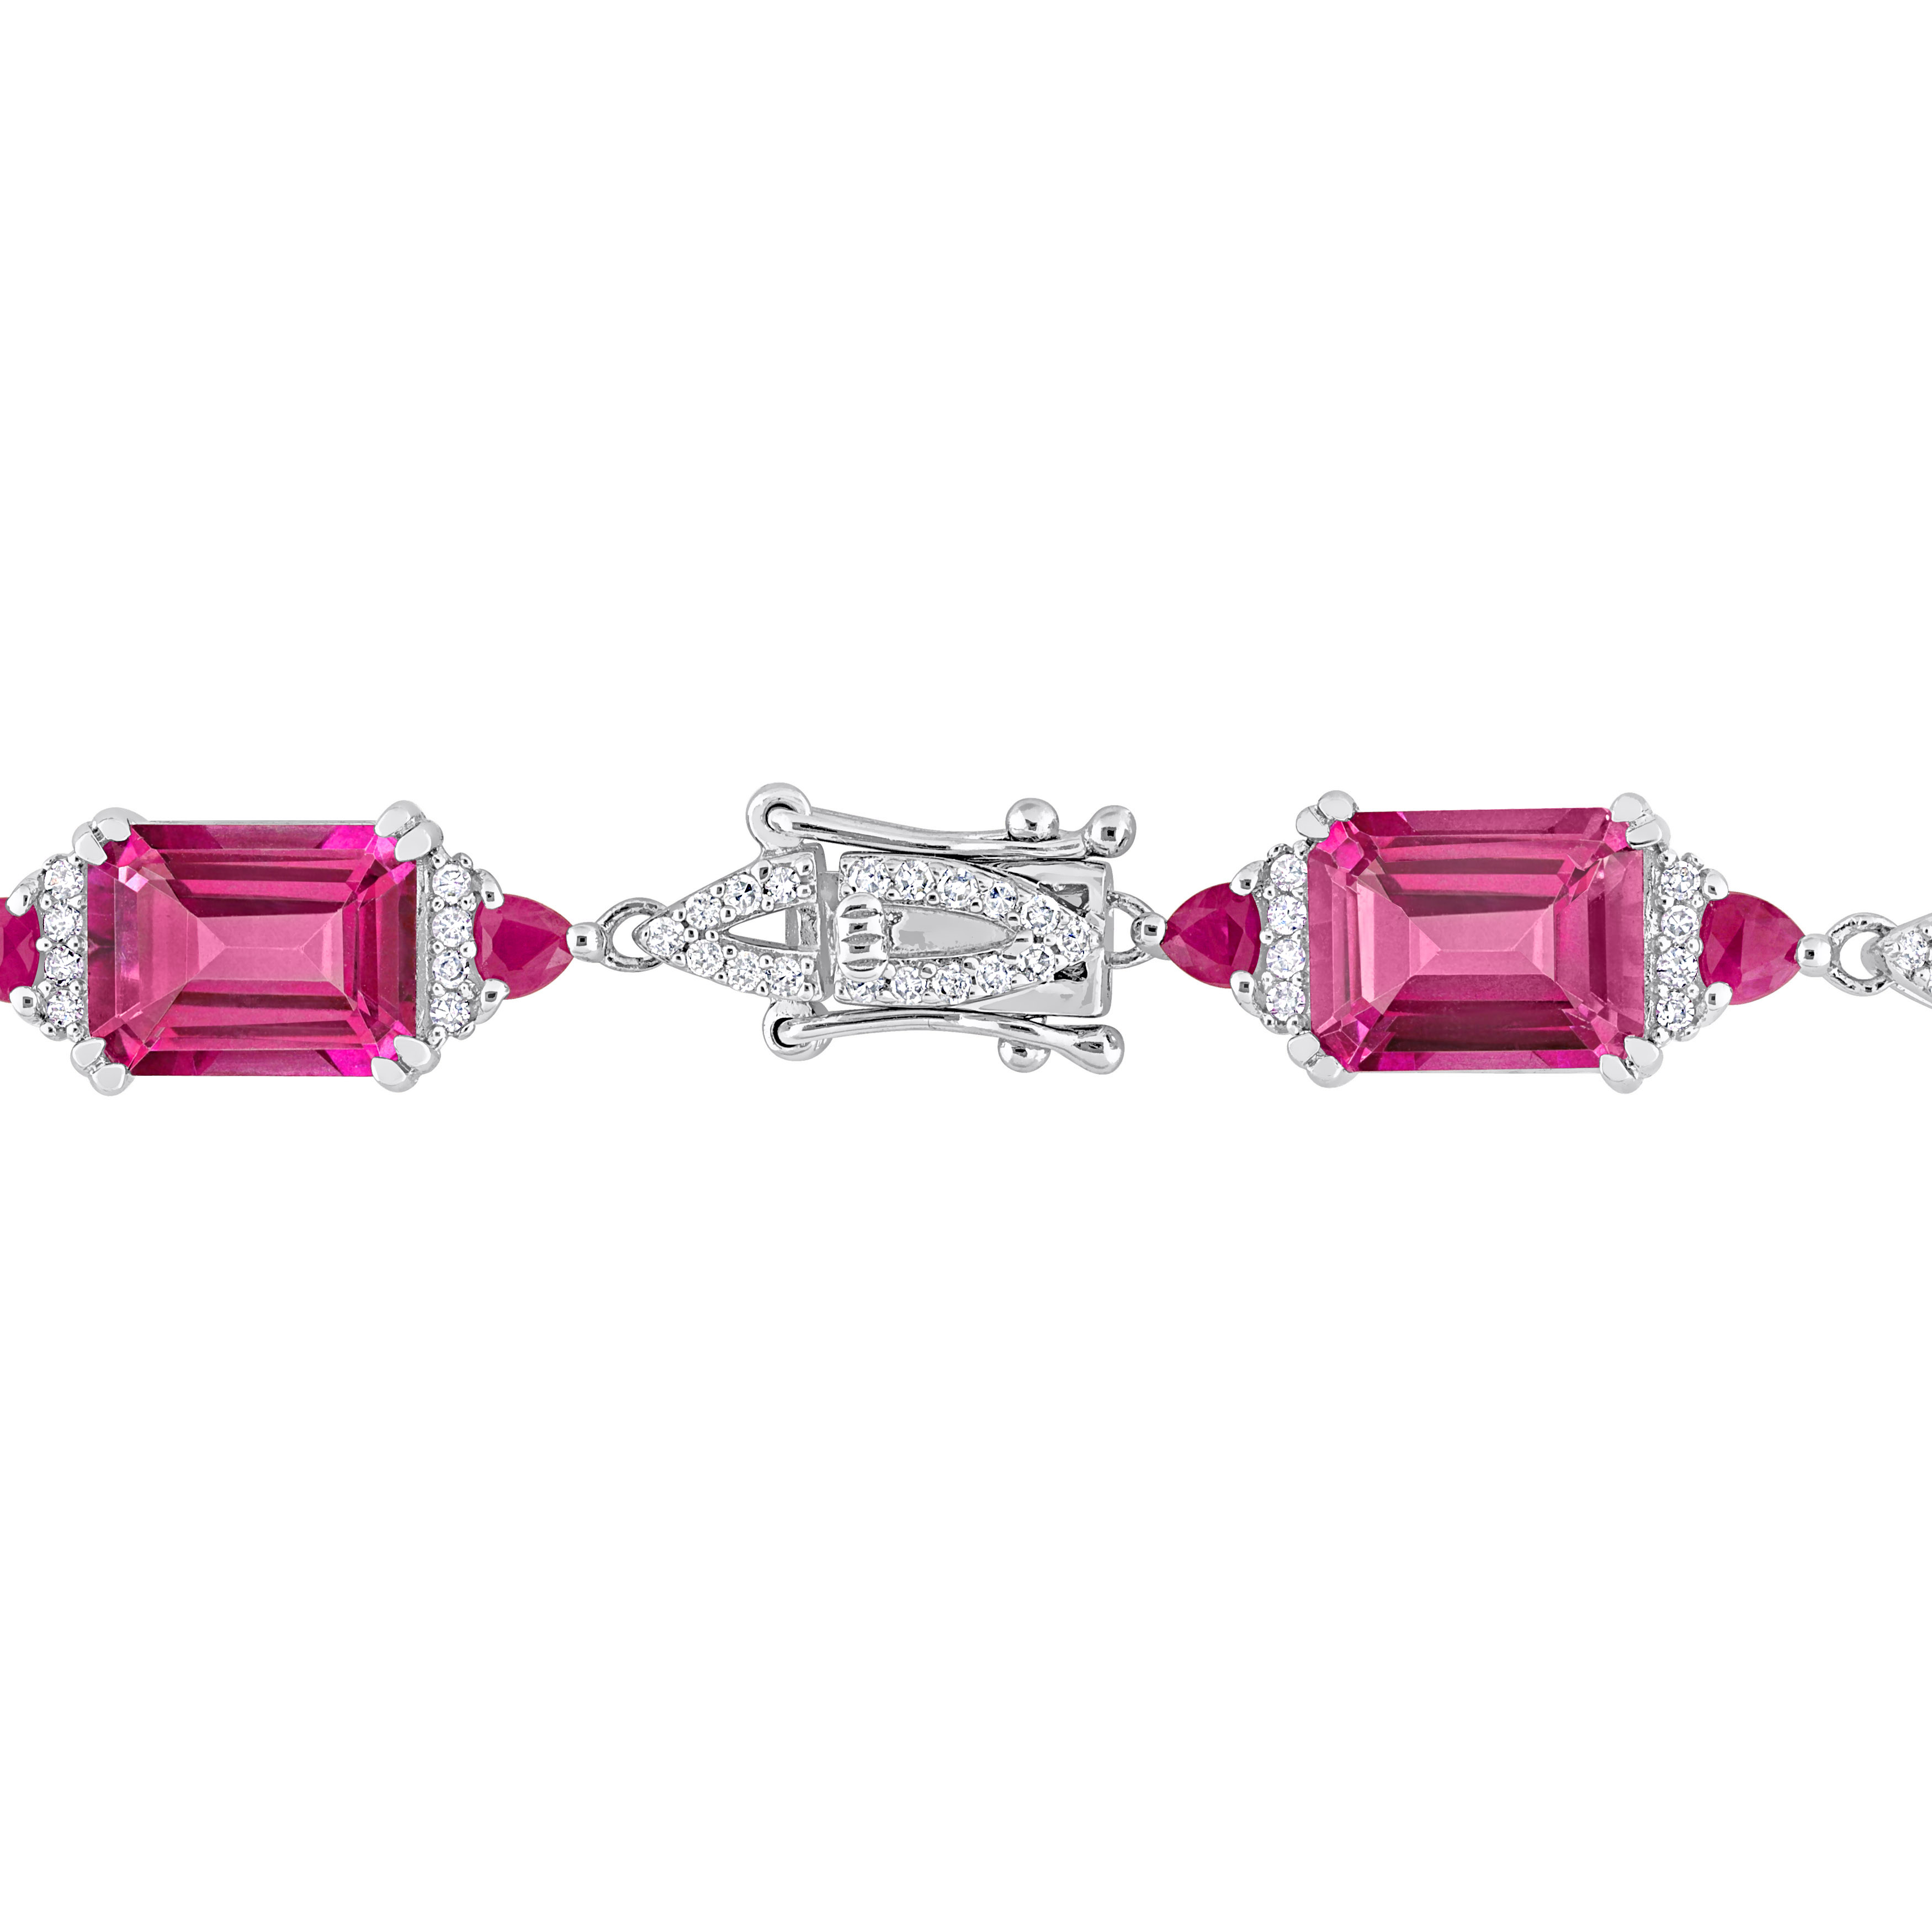 20 1/10 CT TGW Octagon-cut Pink Topaz, Trilliant-cut Ruby and 7/8 CT TDW Diamond Fancy Link Bracelet in Sterling Silver - 7.25 in.